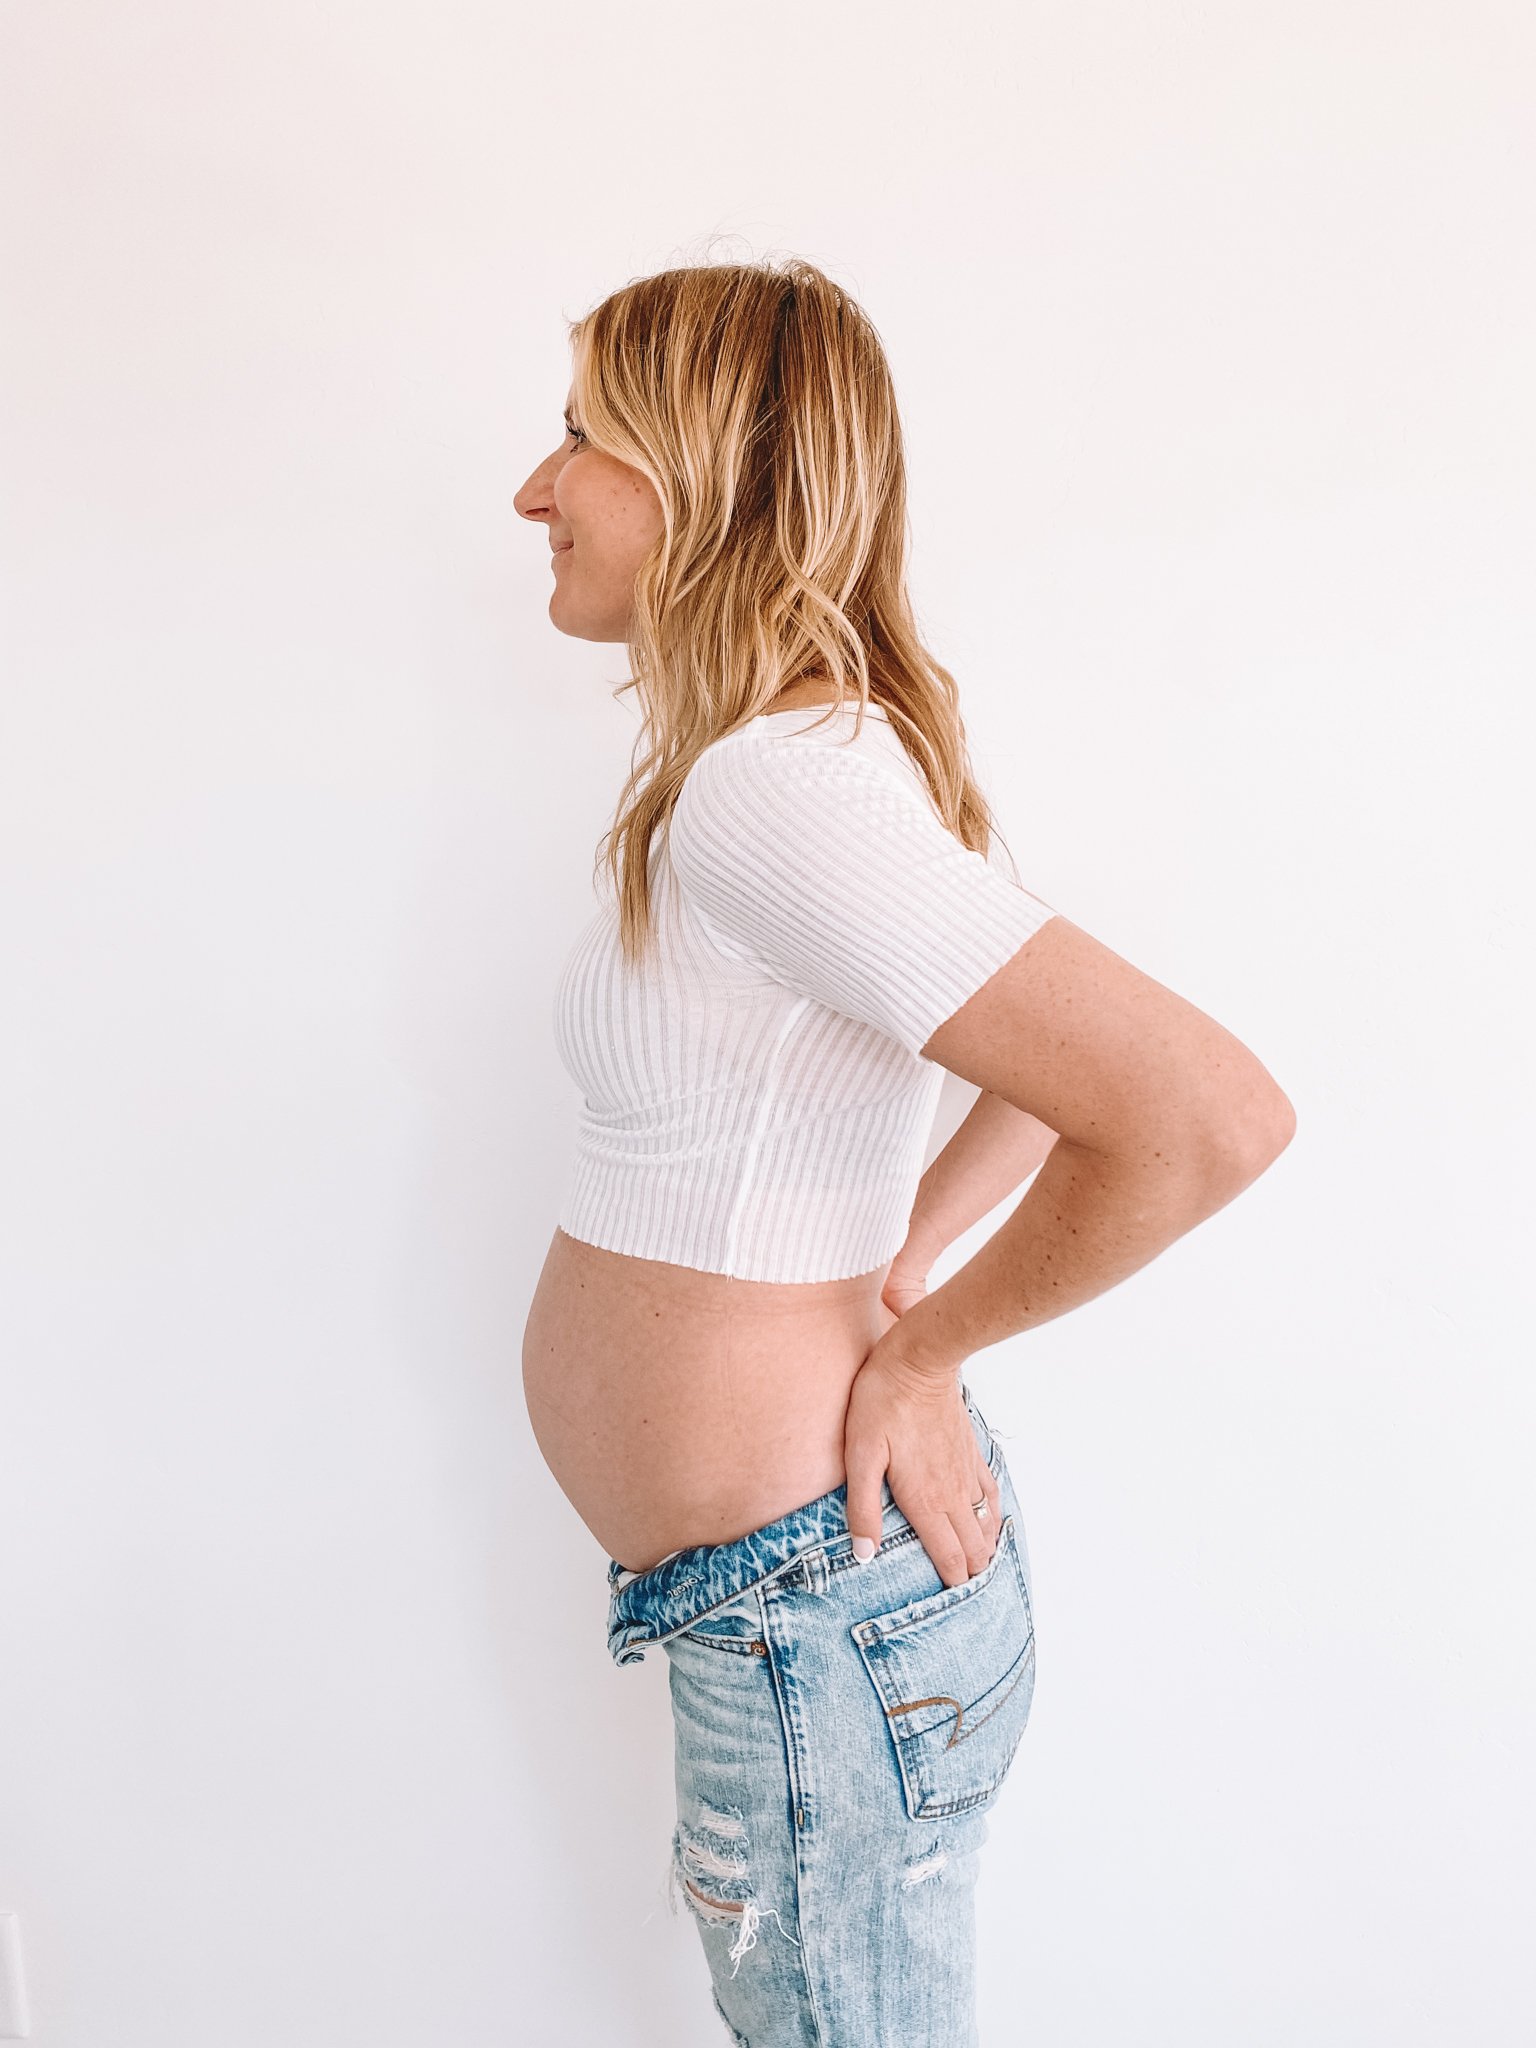 19 Weeks Pregnant Baby Bump